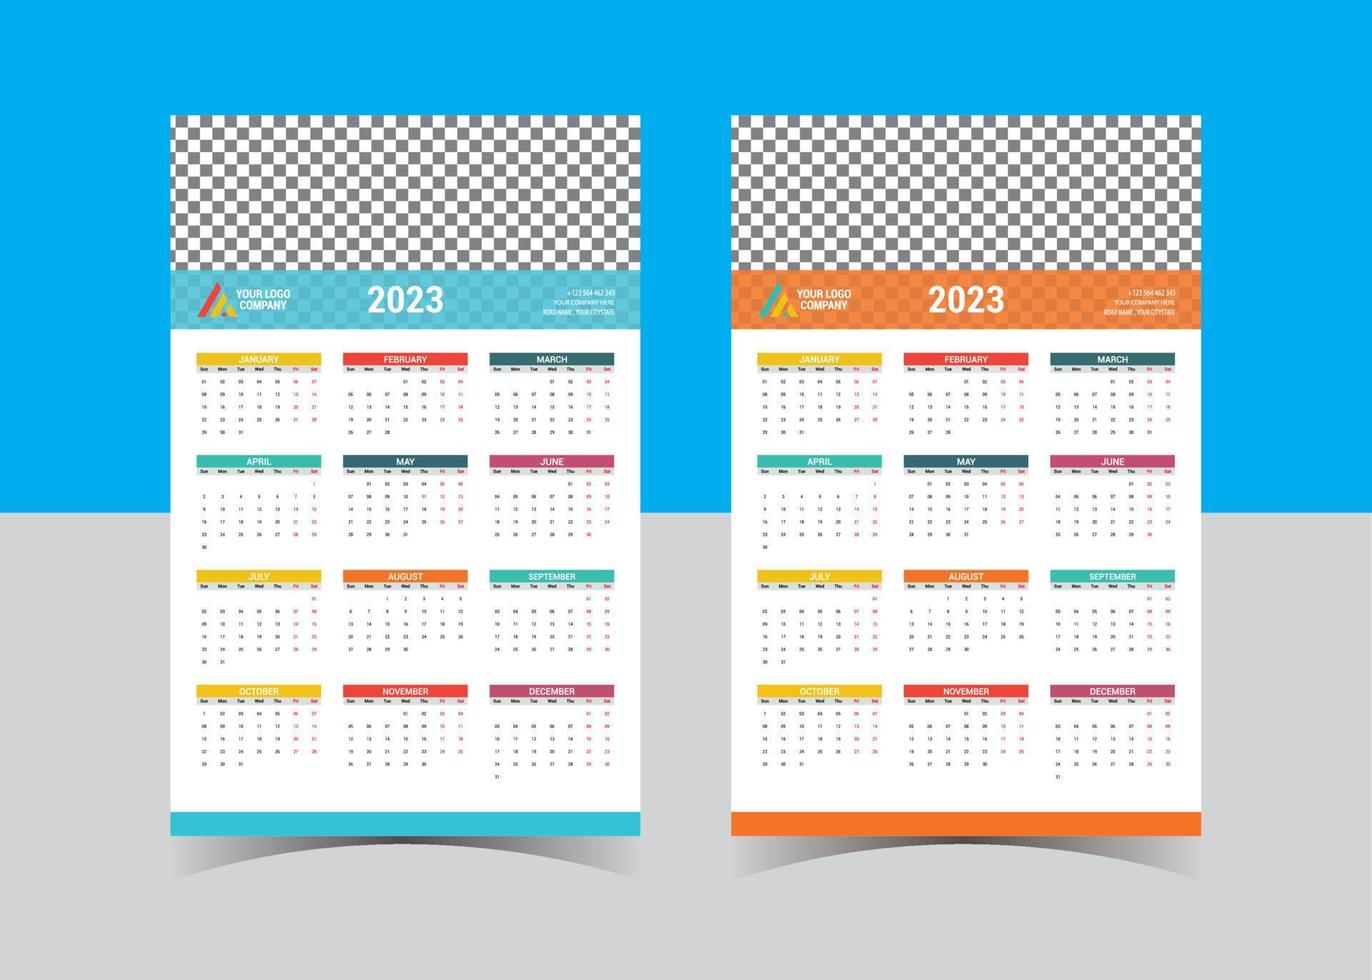 Calendar Planner 2021 - Vector Template. Week starts on Sunday